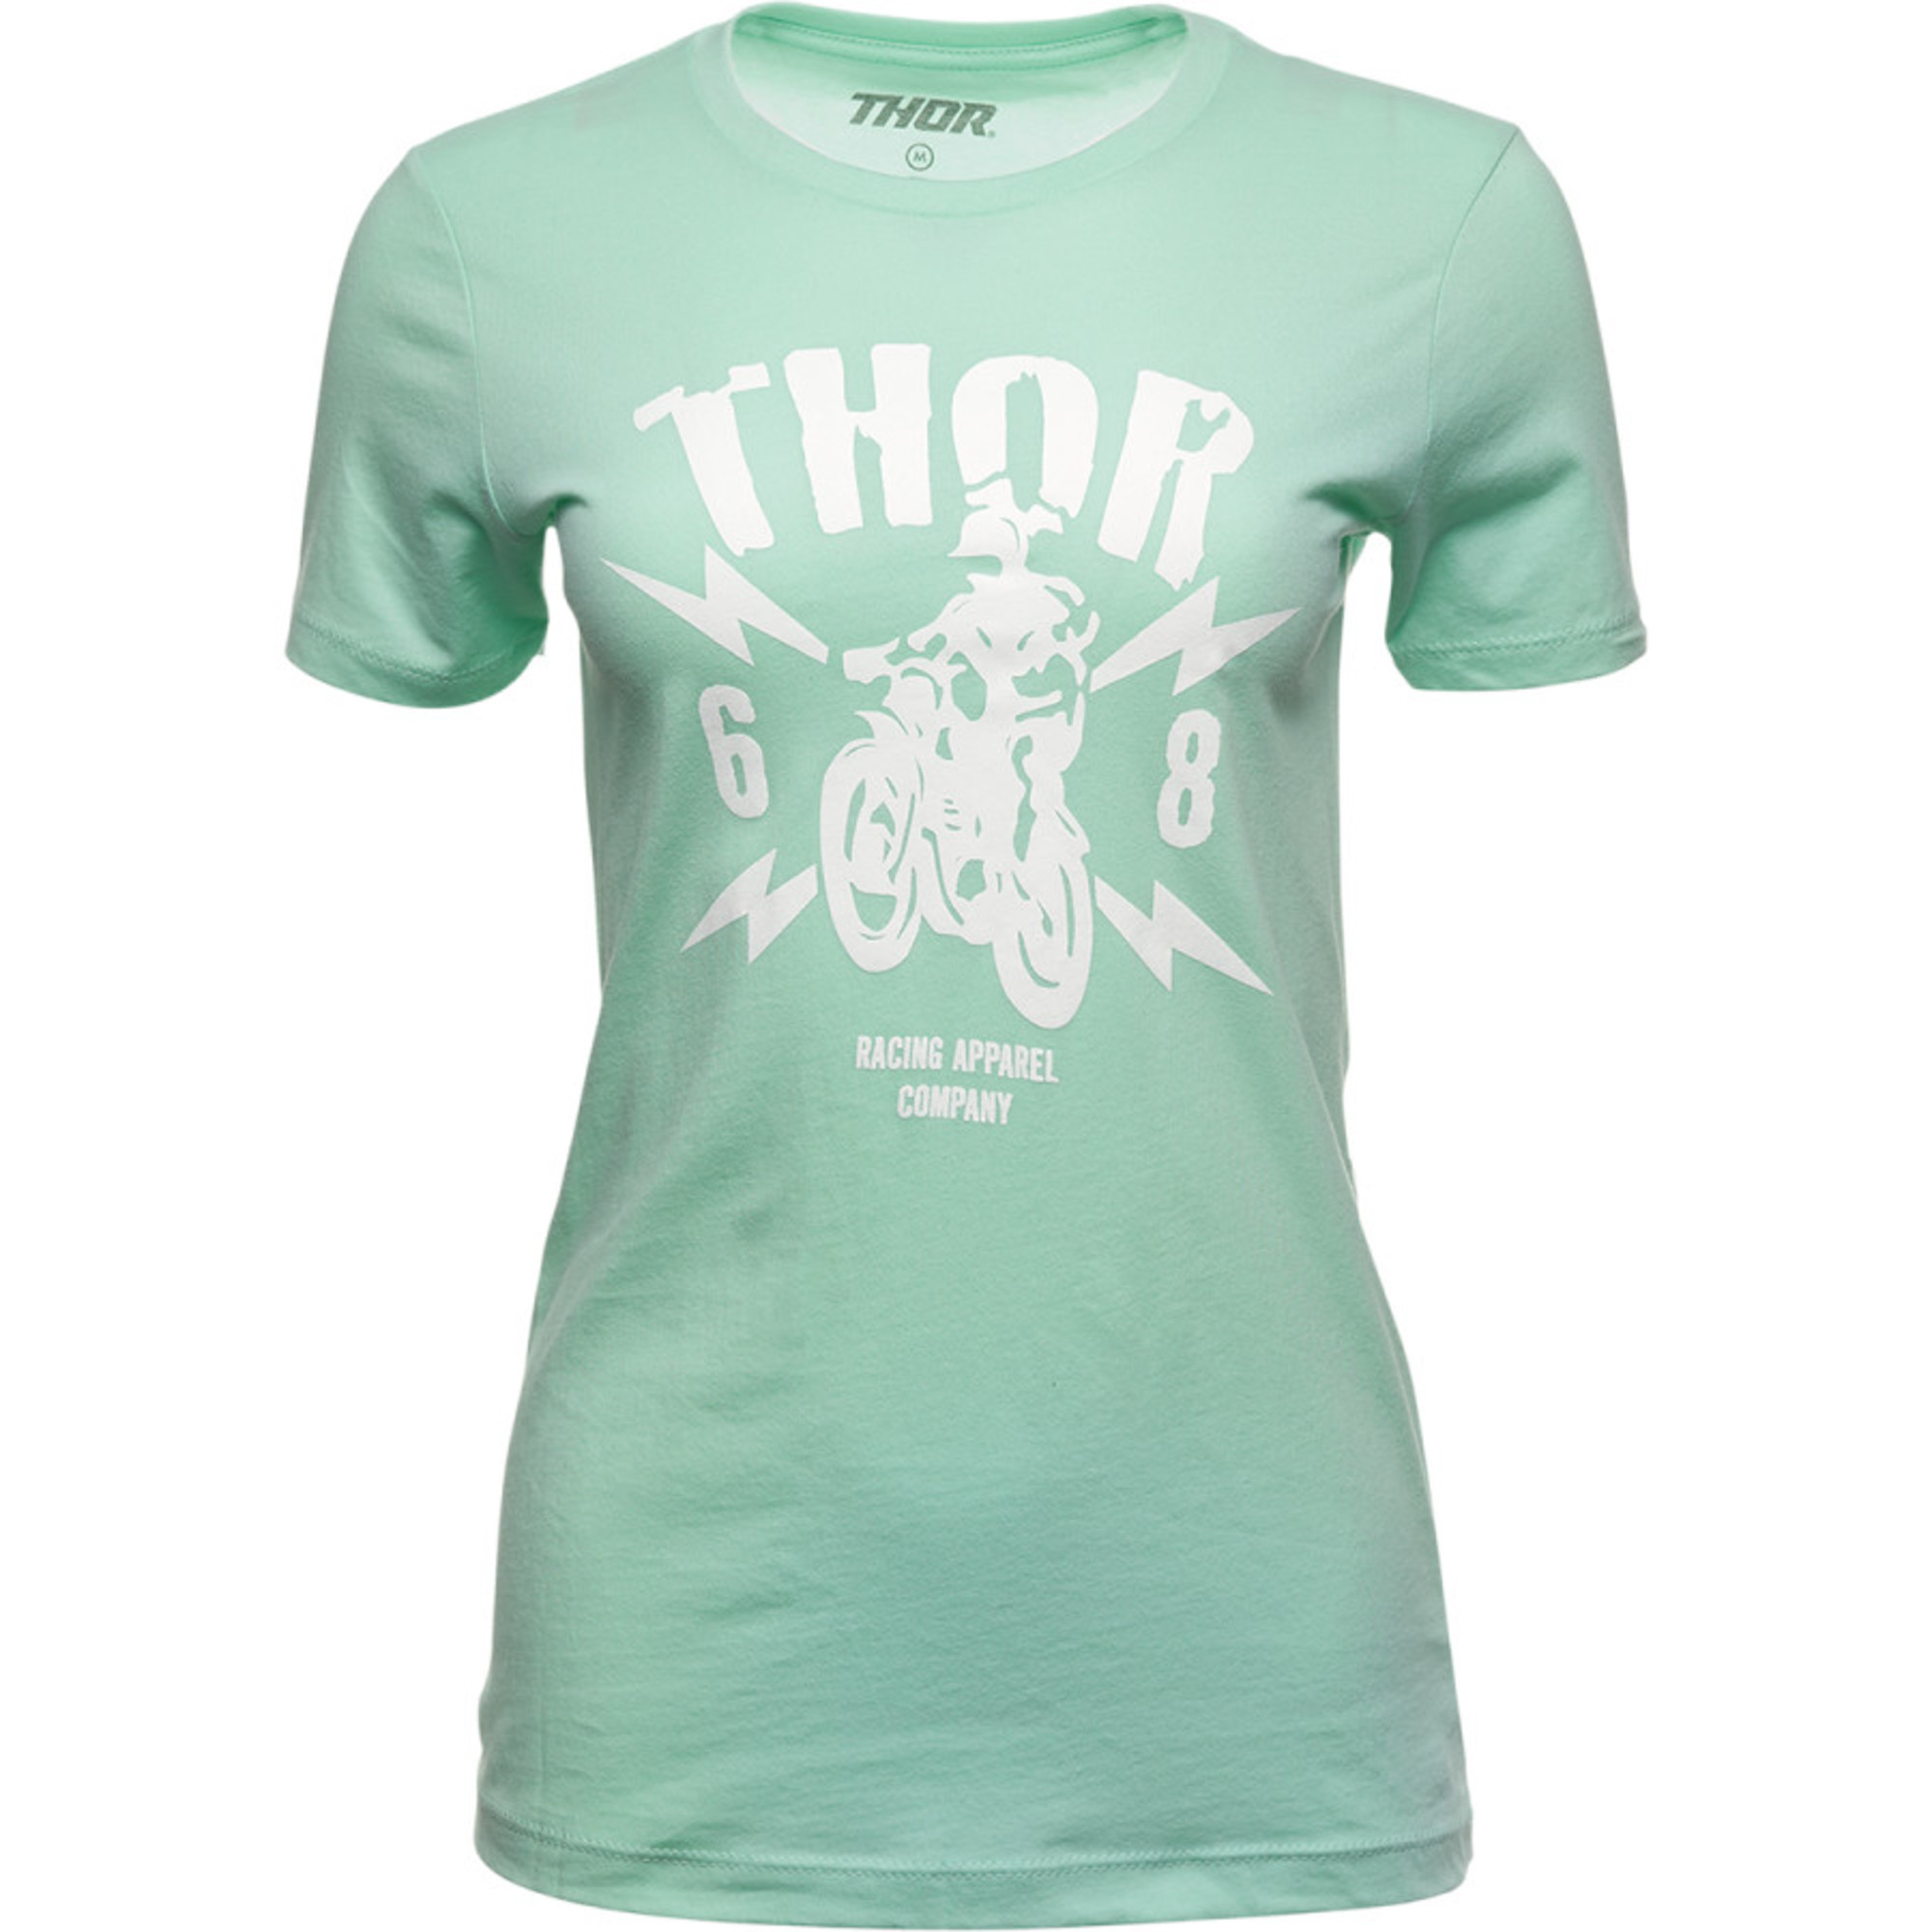 thor t-shirt shirts for womens lightning